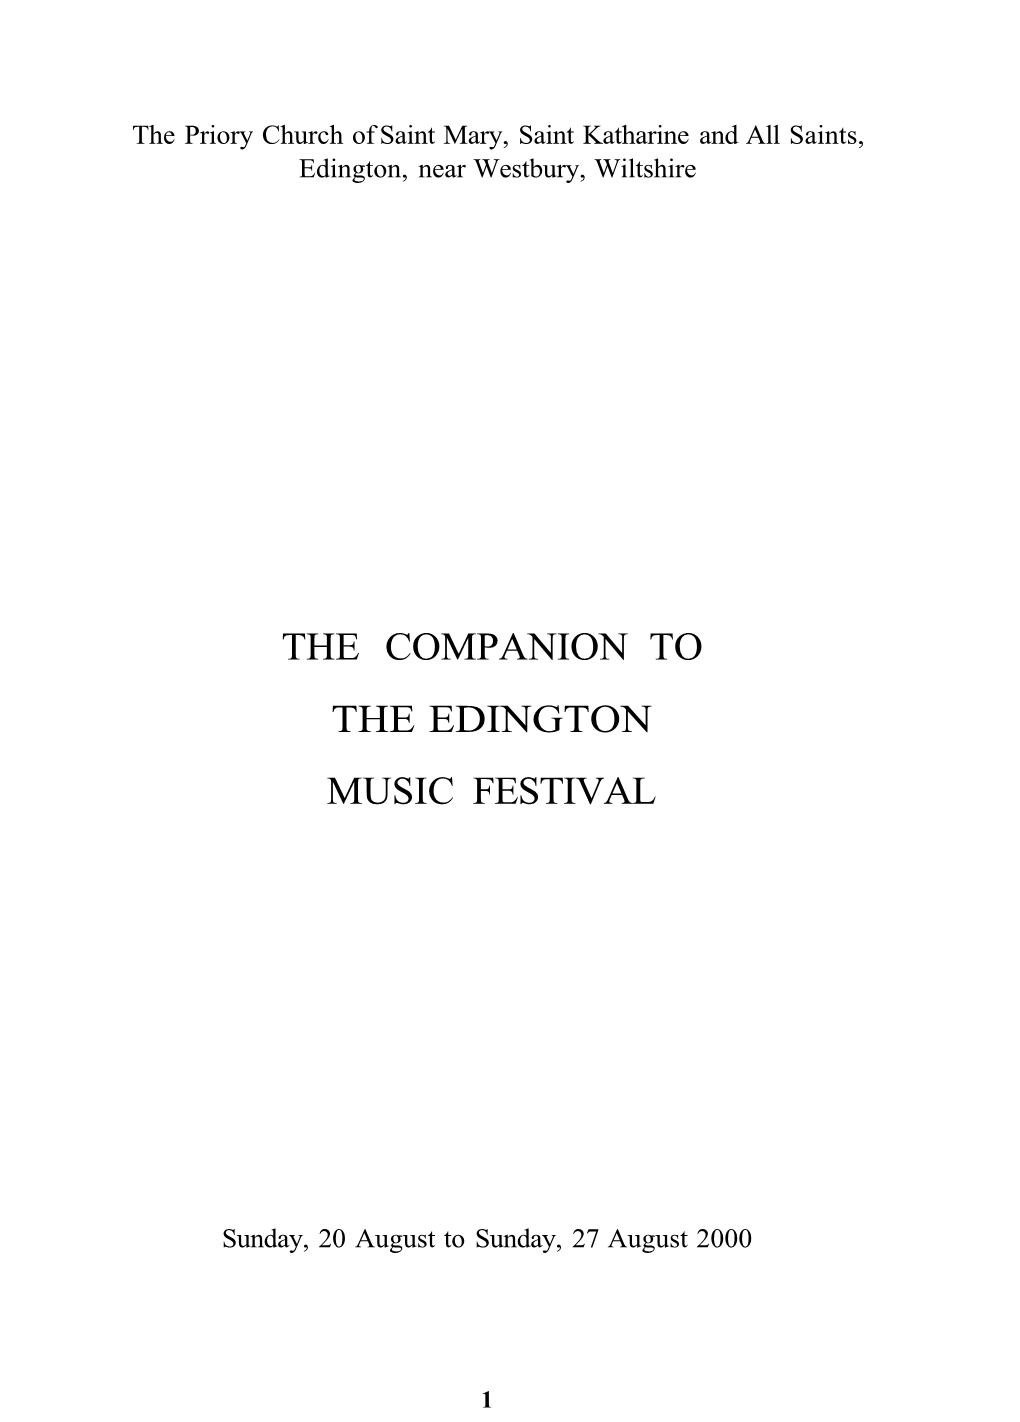 The Companion to the Edington Music Festival